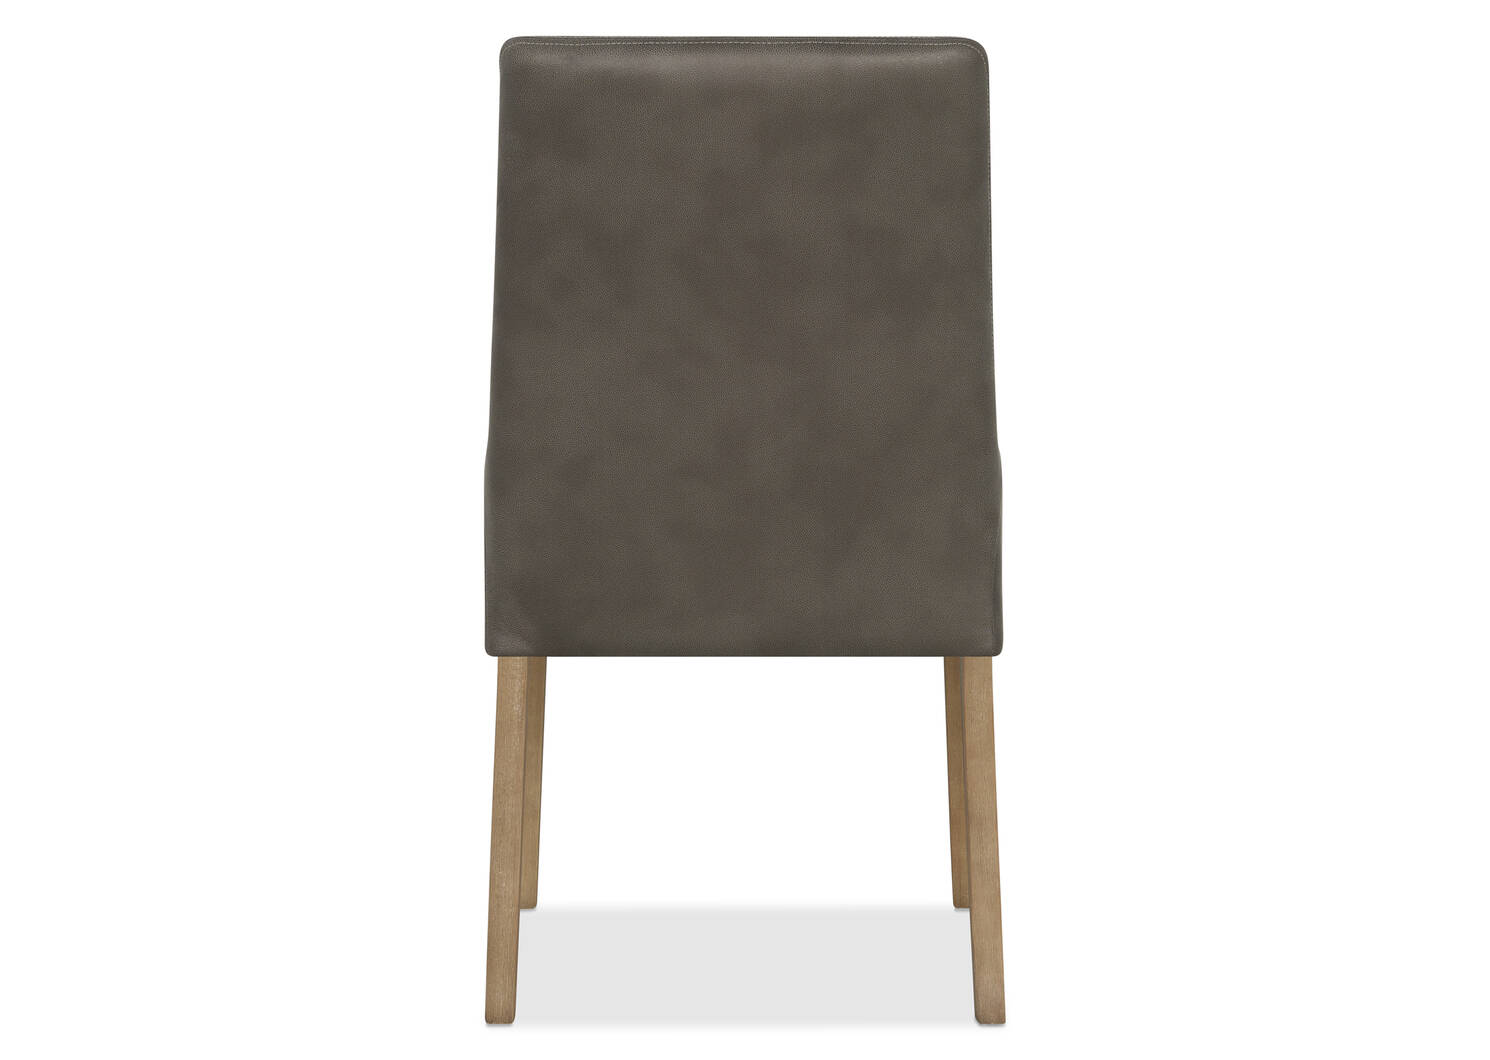 Murdoch Dining Chair -Unika Slate